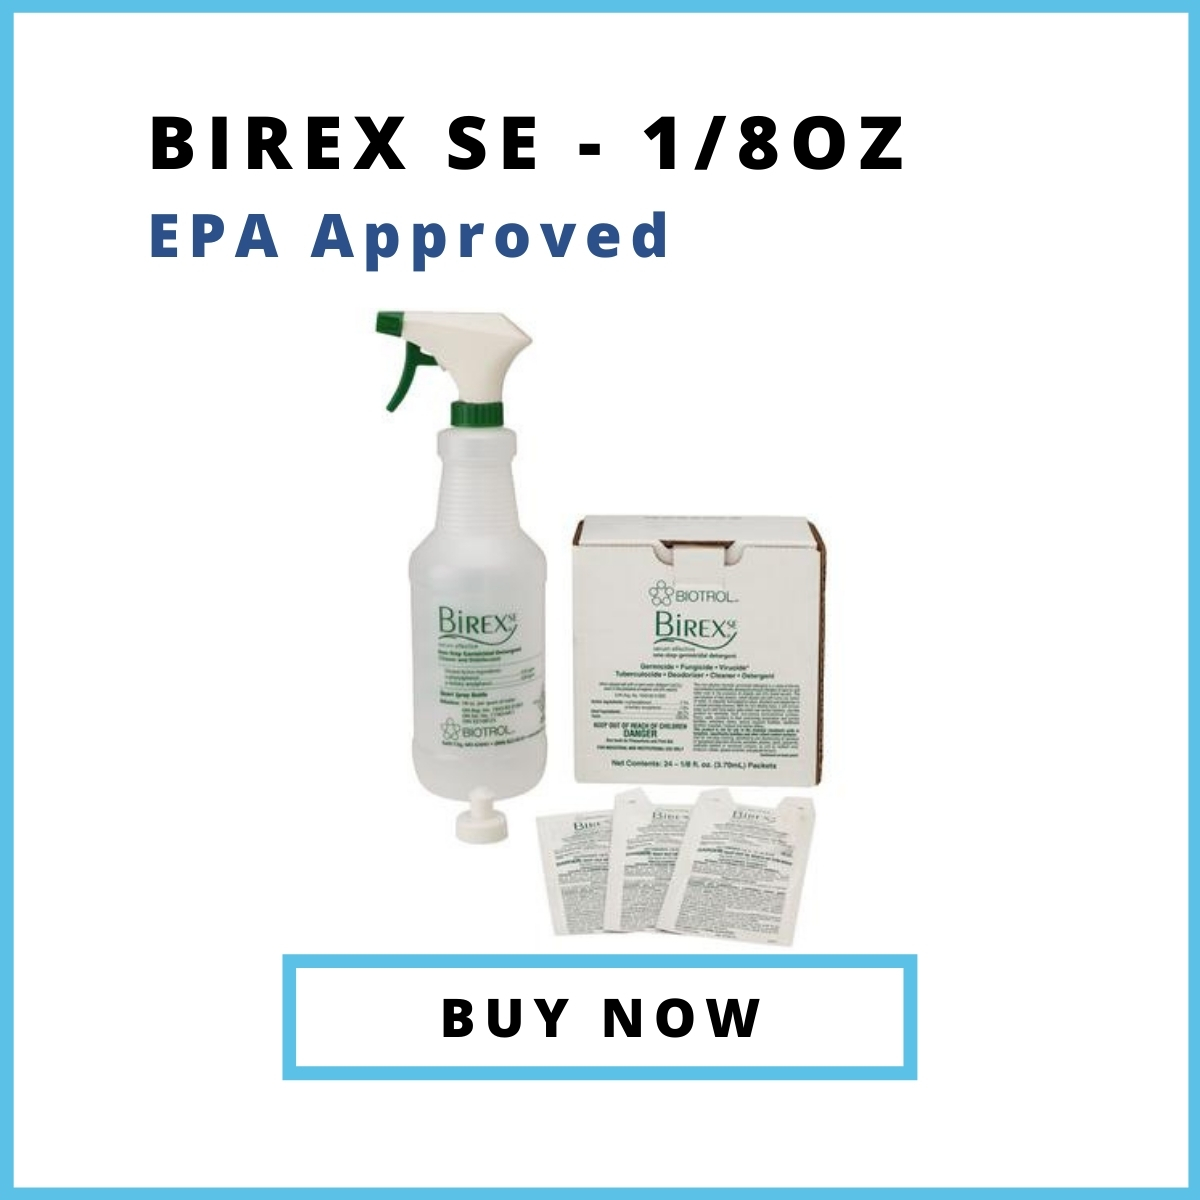 Shoppable ad - Birex Disinfectant - Biotrol - Buy Now